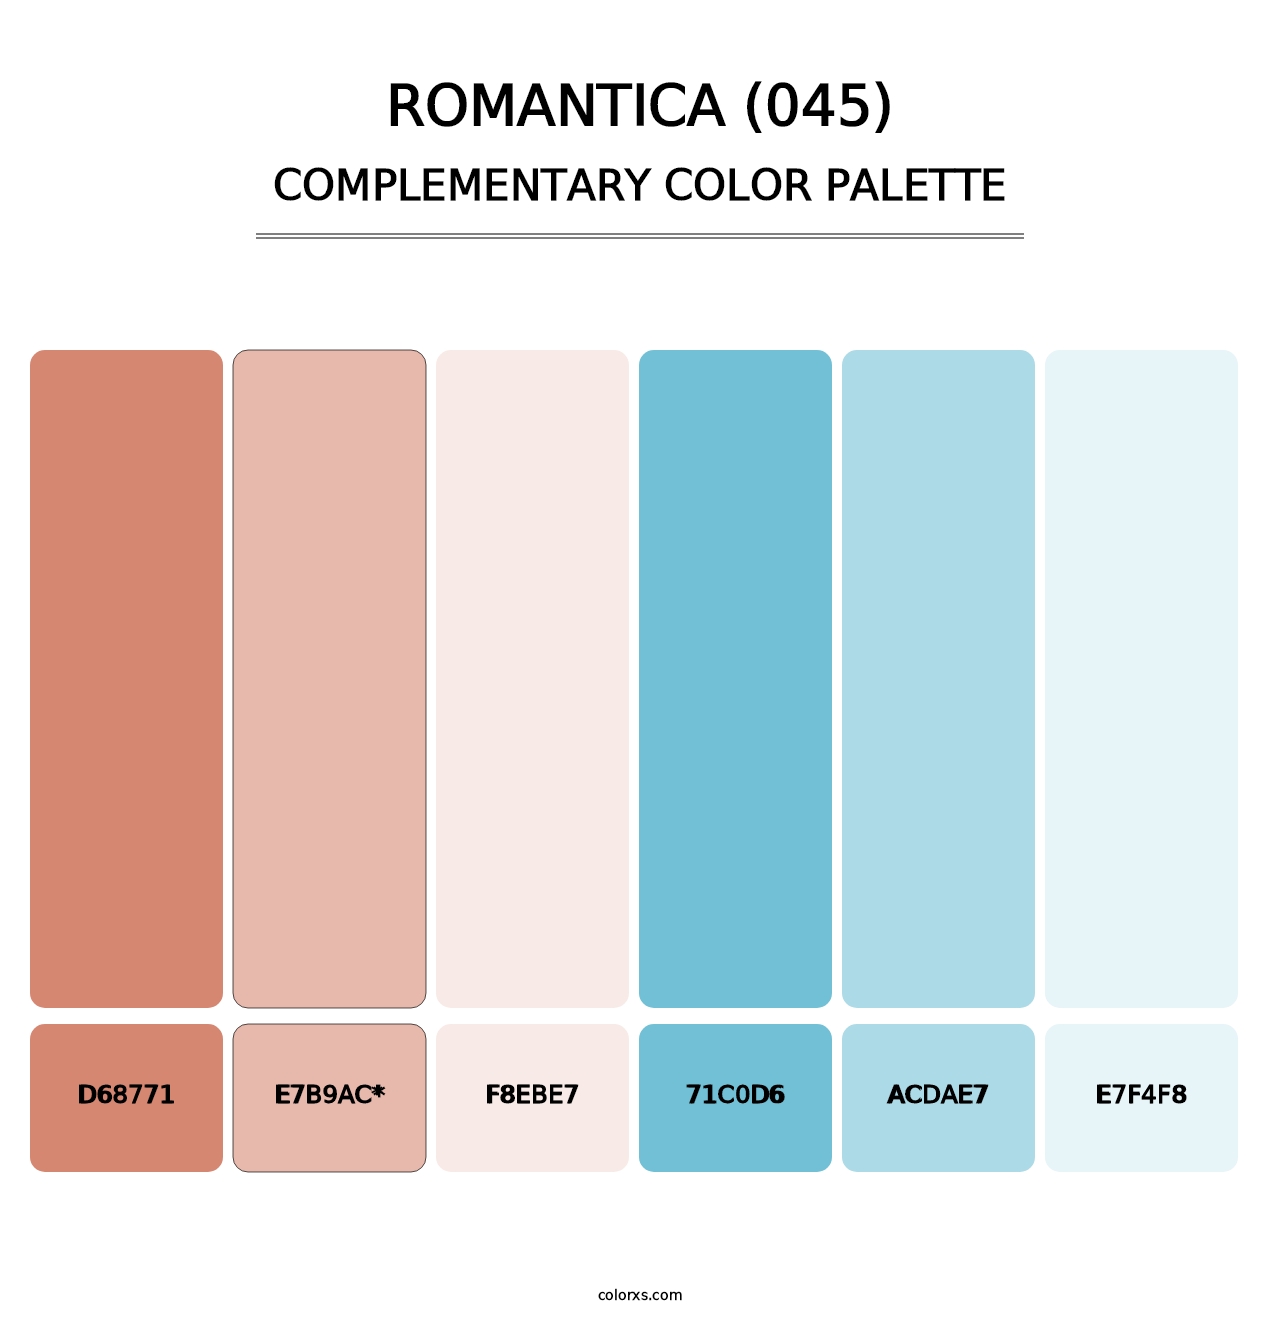 Romantica (045) - Complementary Color Palette